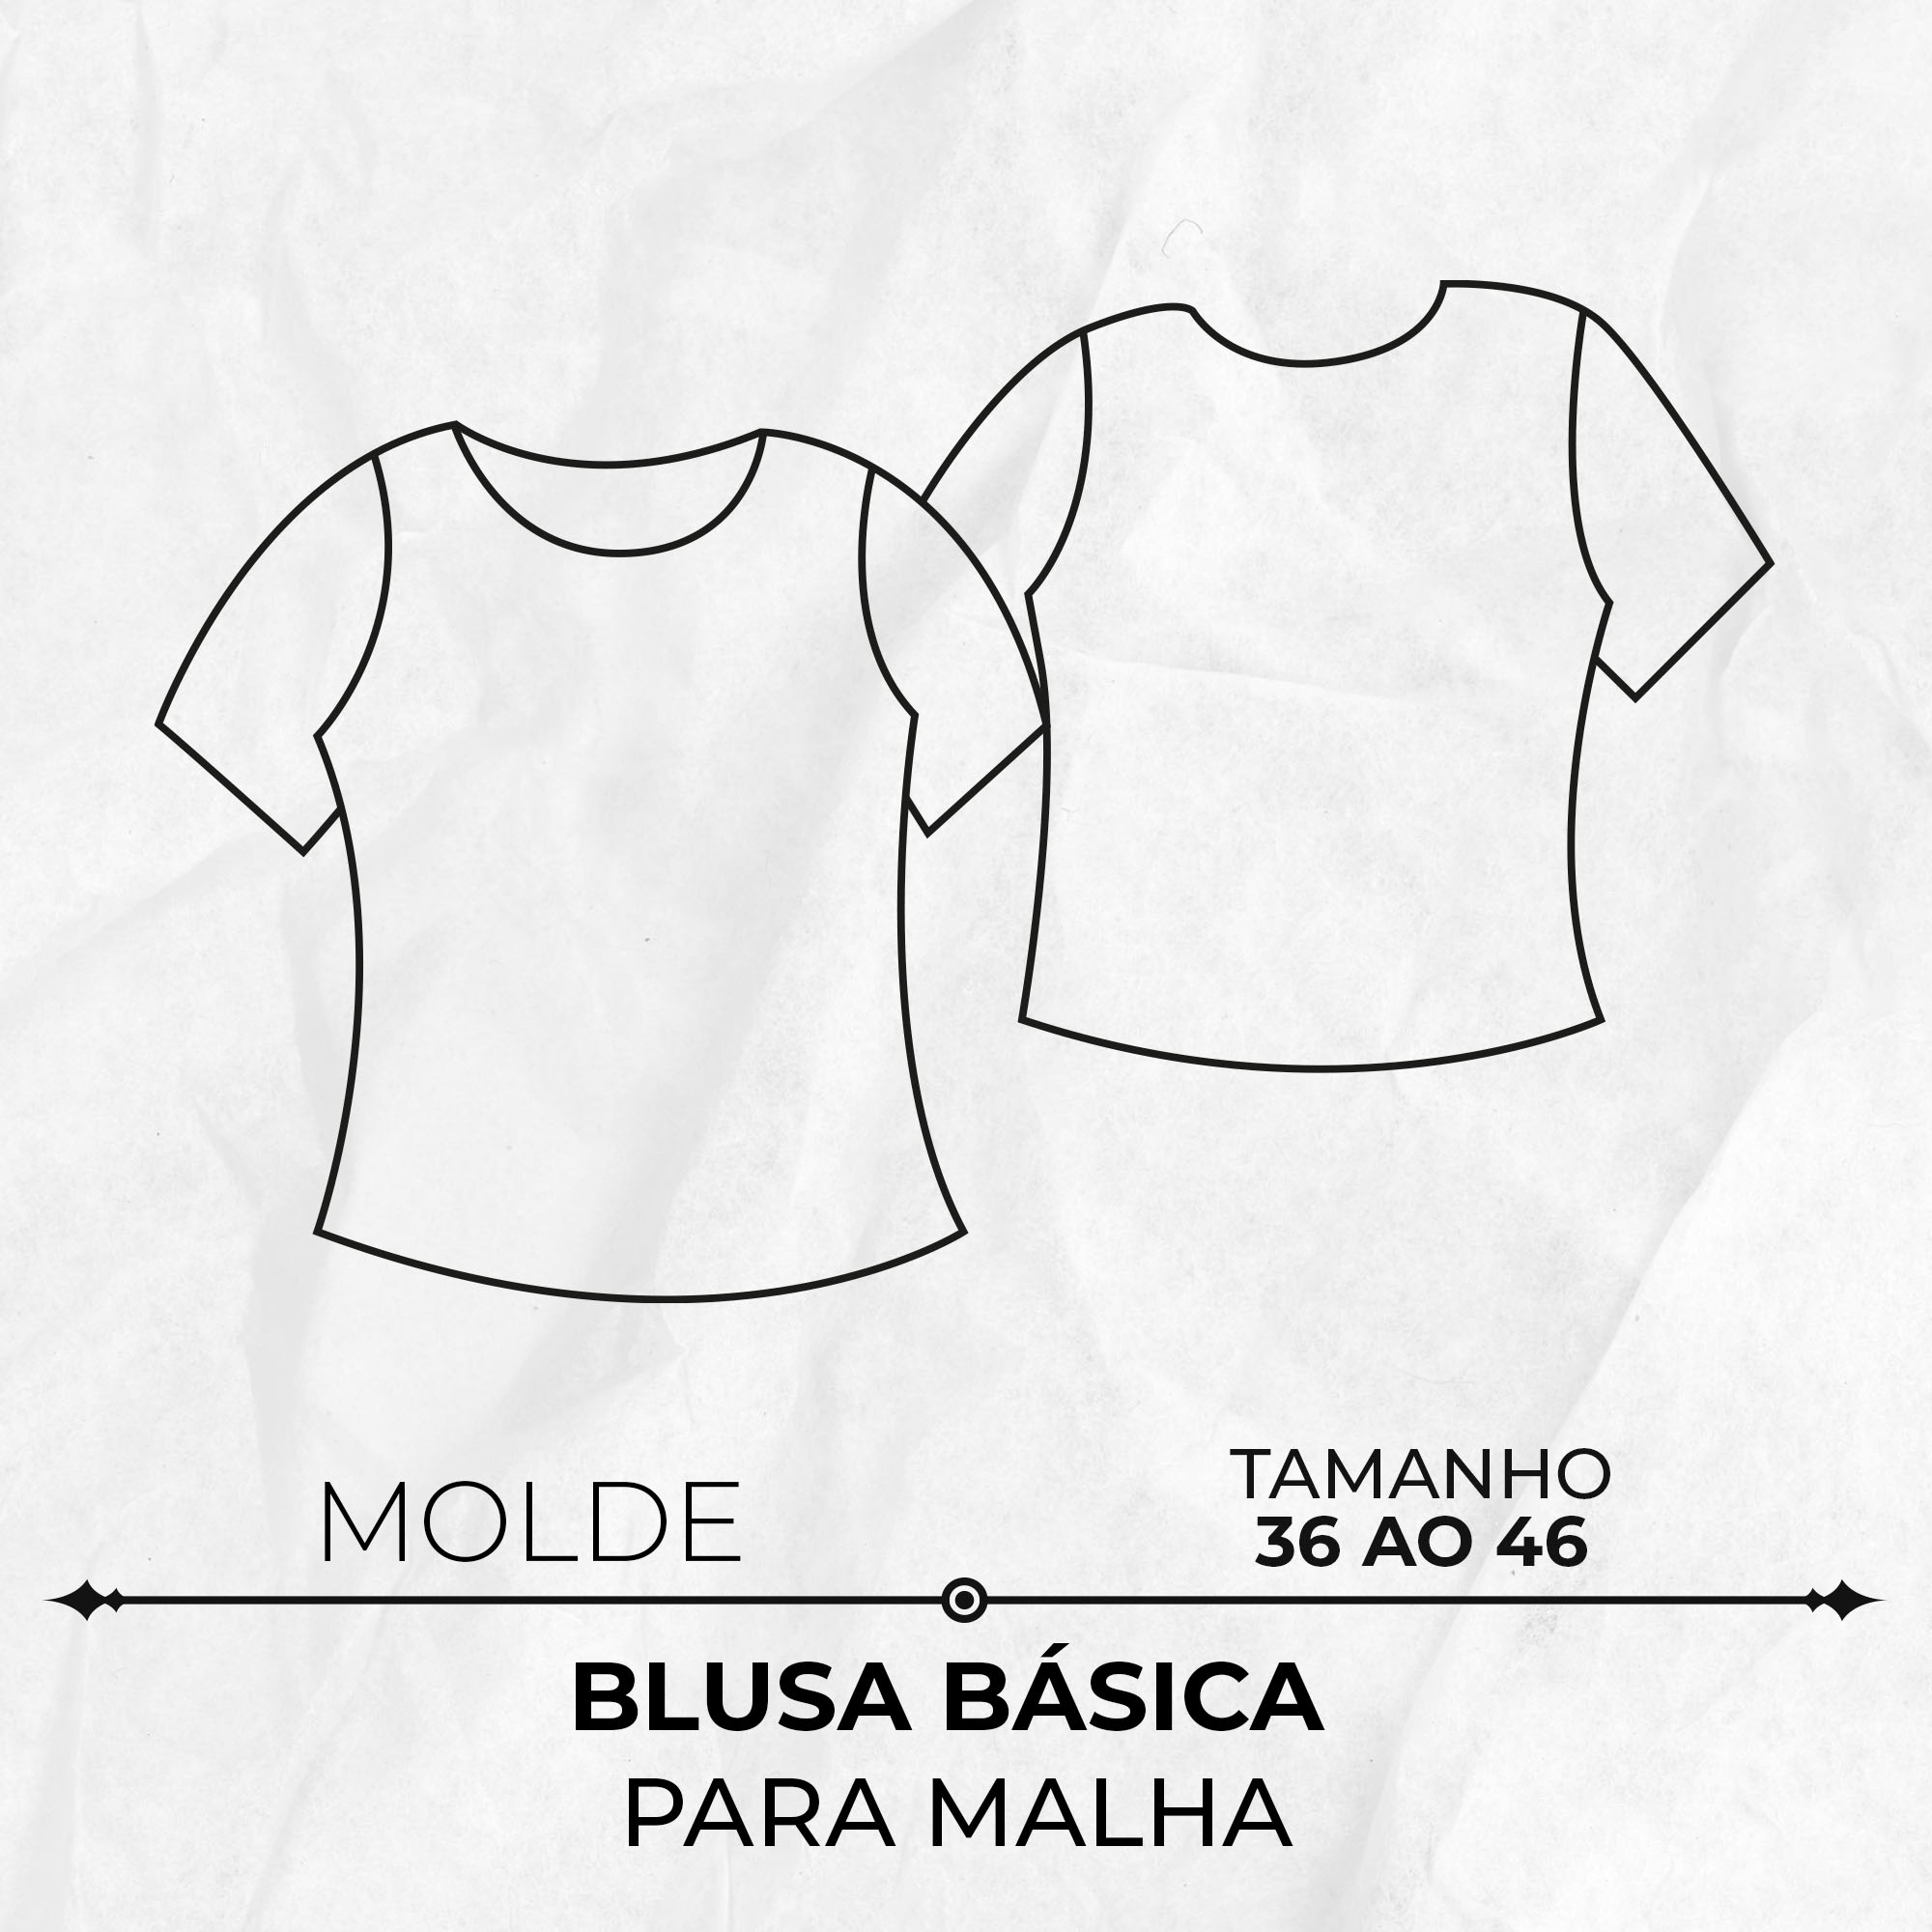 Molde blusa básica para malha 36 ao 46 by Marlene Mukai